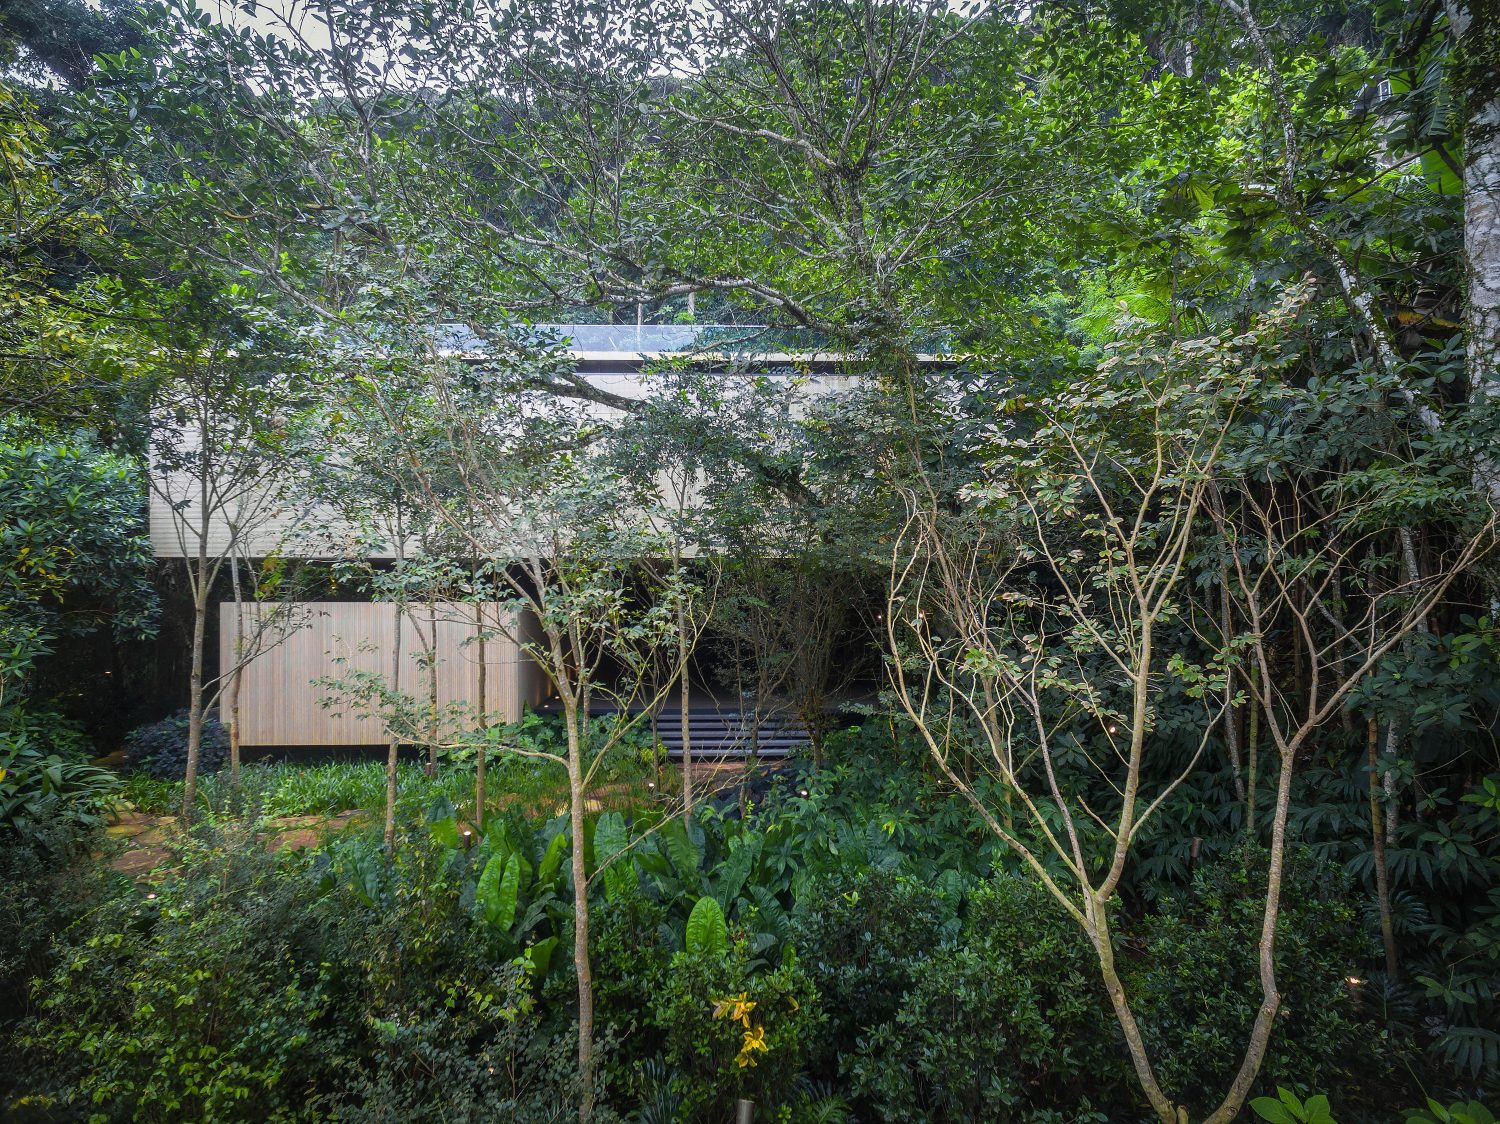 Jungle House by Studio MK27